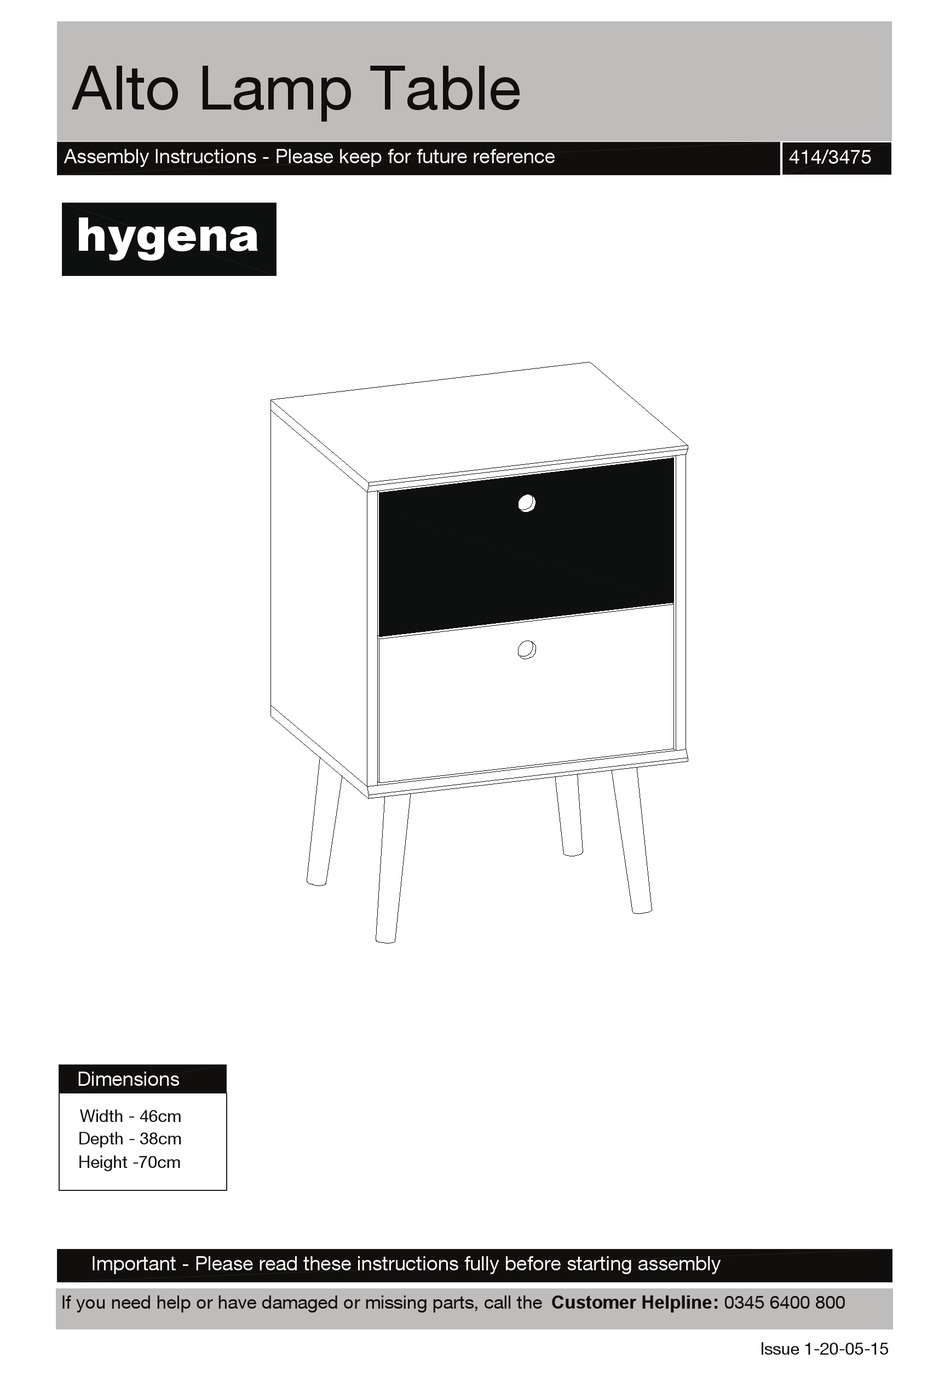 hygena-alto-414-3475-assembly-lnstructions-pdf-download-manualslib